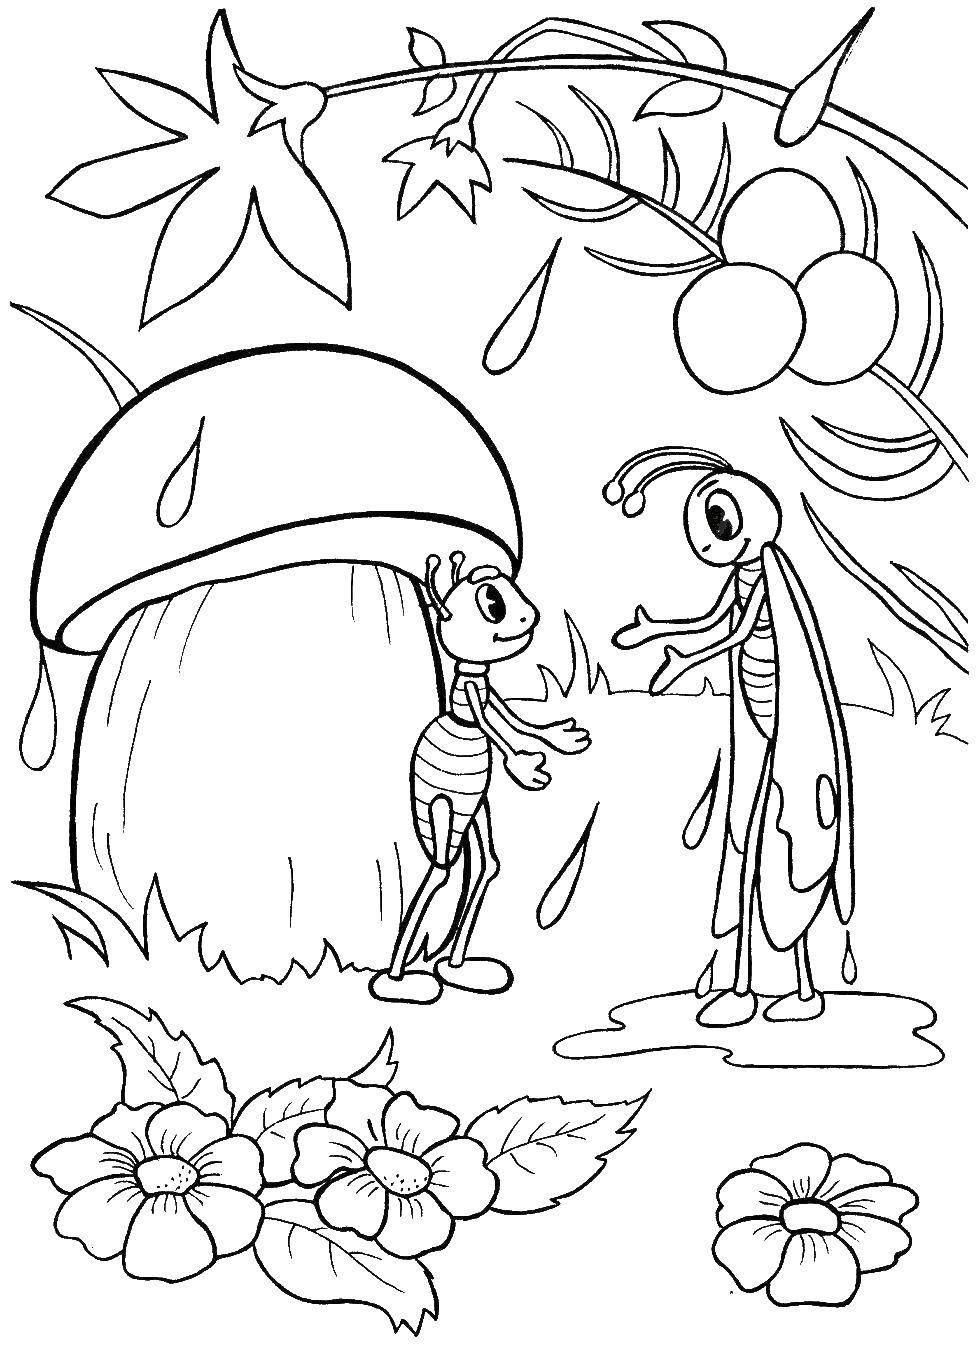 Название: Раскраска Муравьишка и кузнечик под грибом. Категория: Сказки. Теги: Сказки.